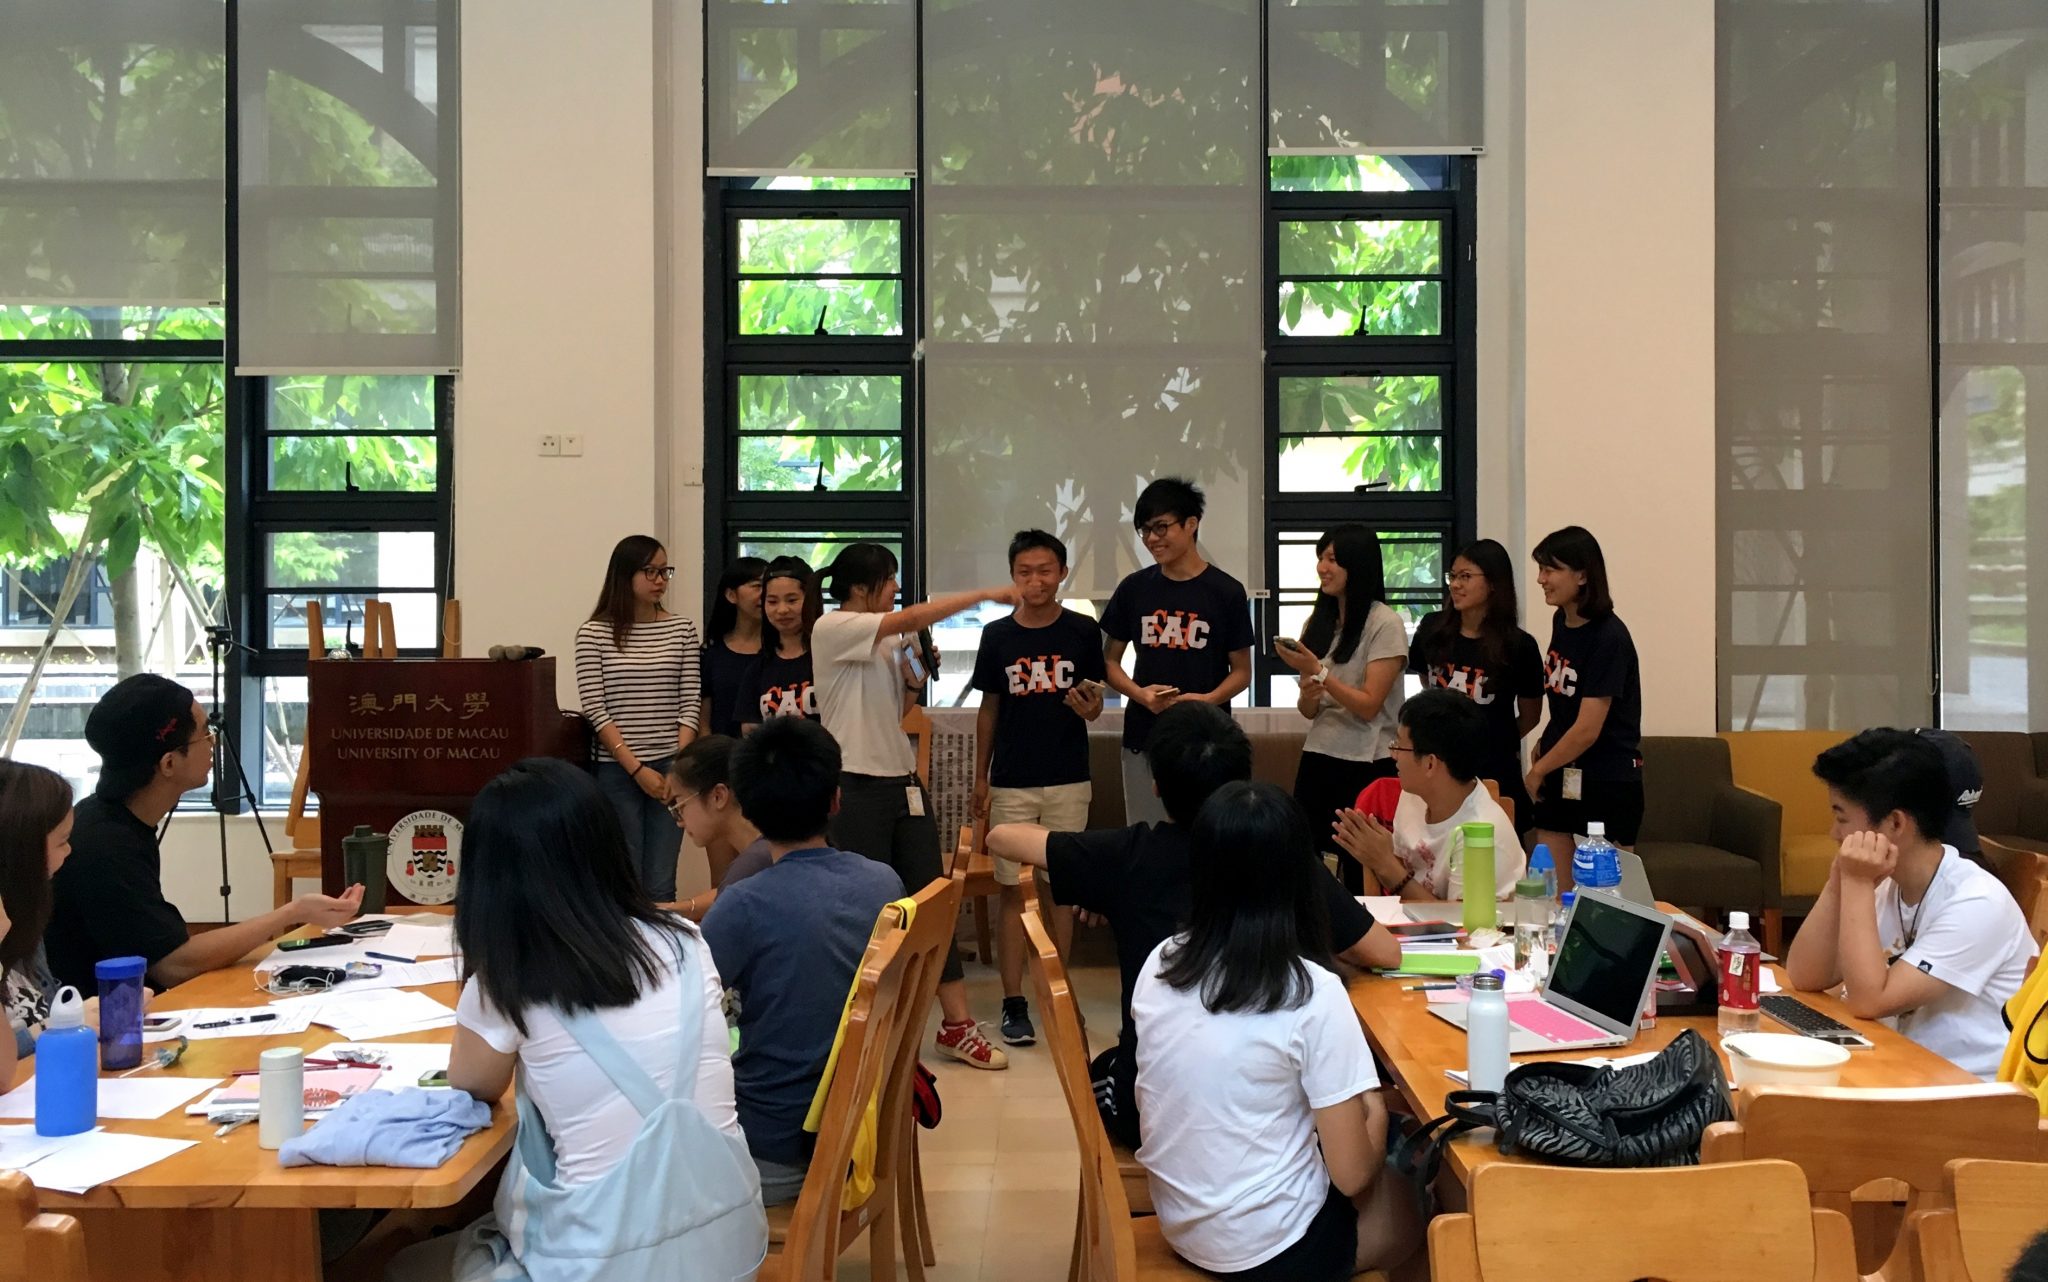 HA leaders presented their freshmen orientation plans. 書院學生會介紹他們的迎新活動計劃。